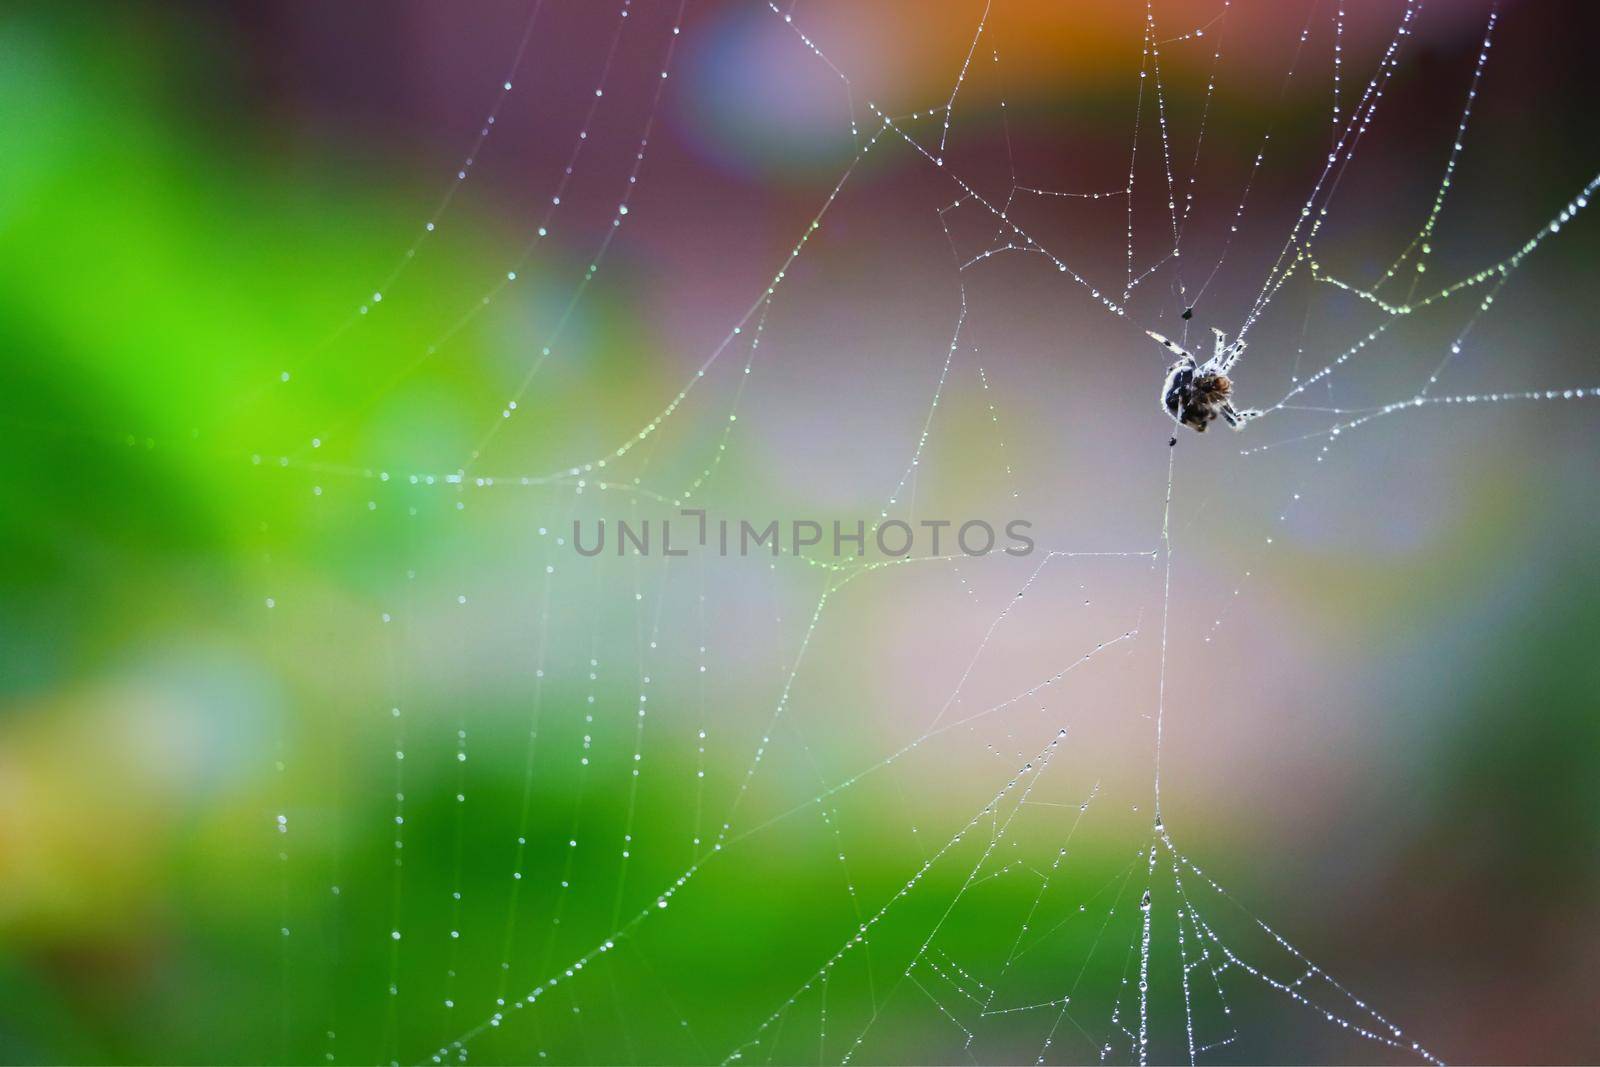 blurred abstract cobweb or spiderweb natural with rain drop pattern green garden by Darkfox